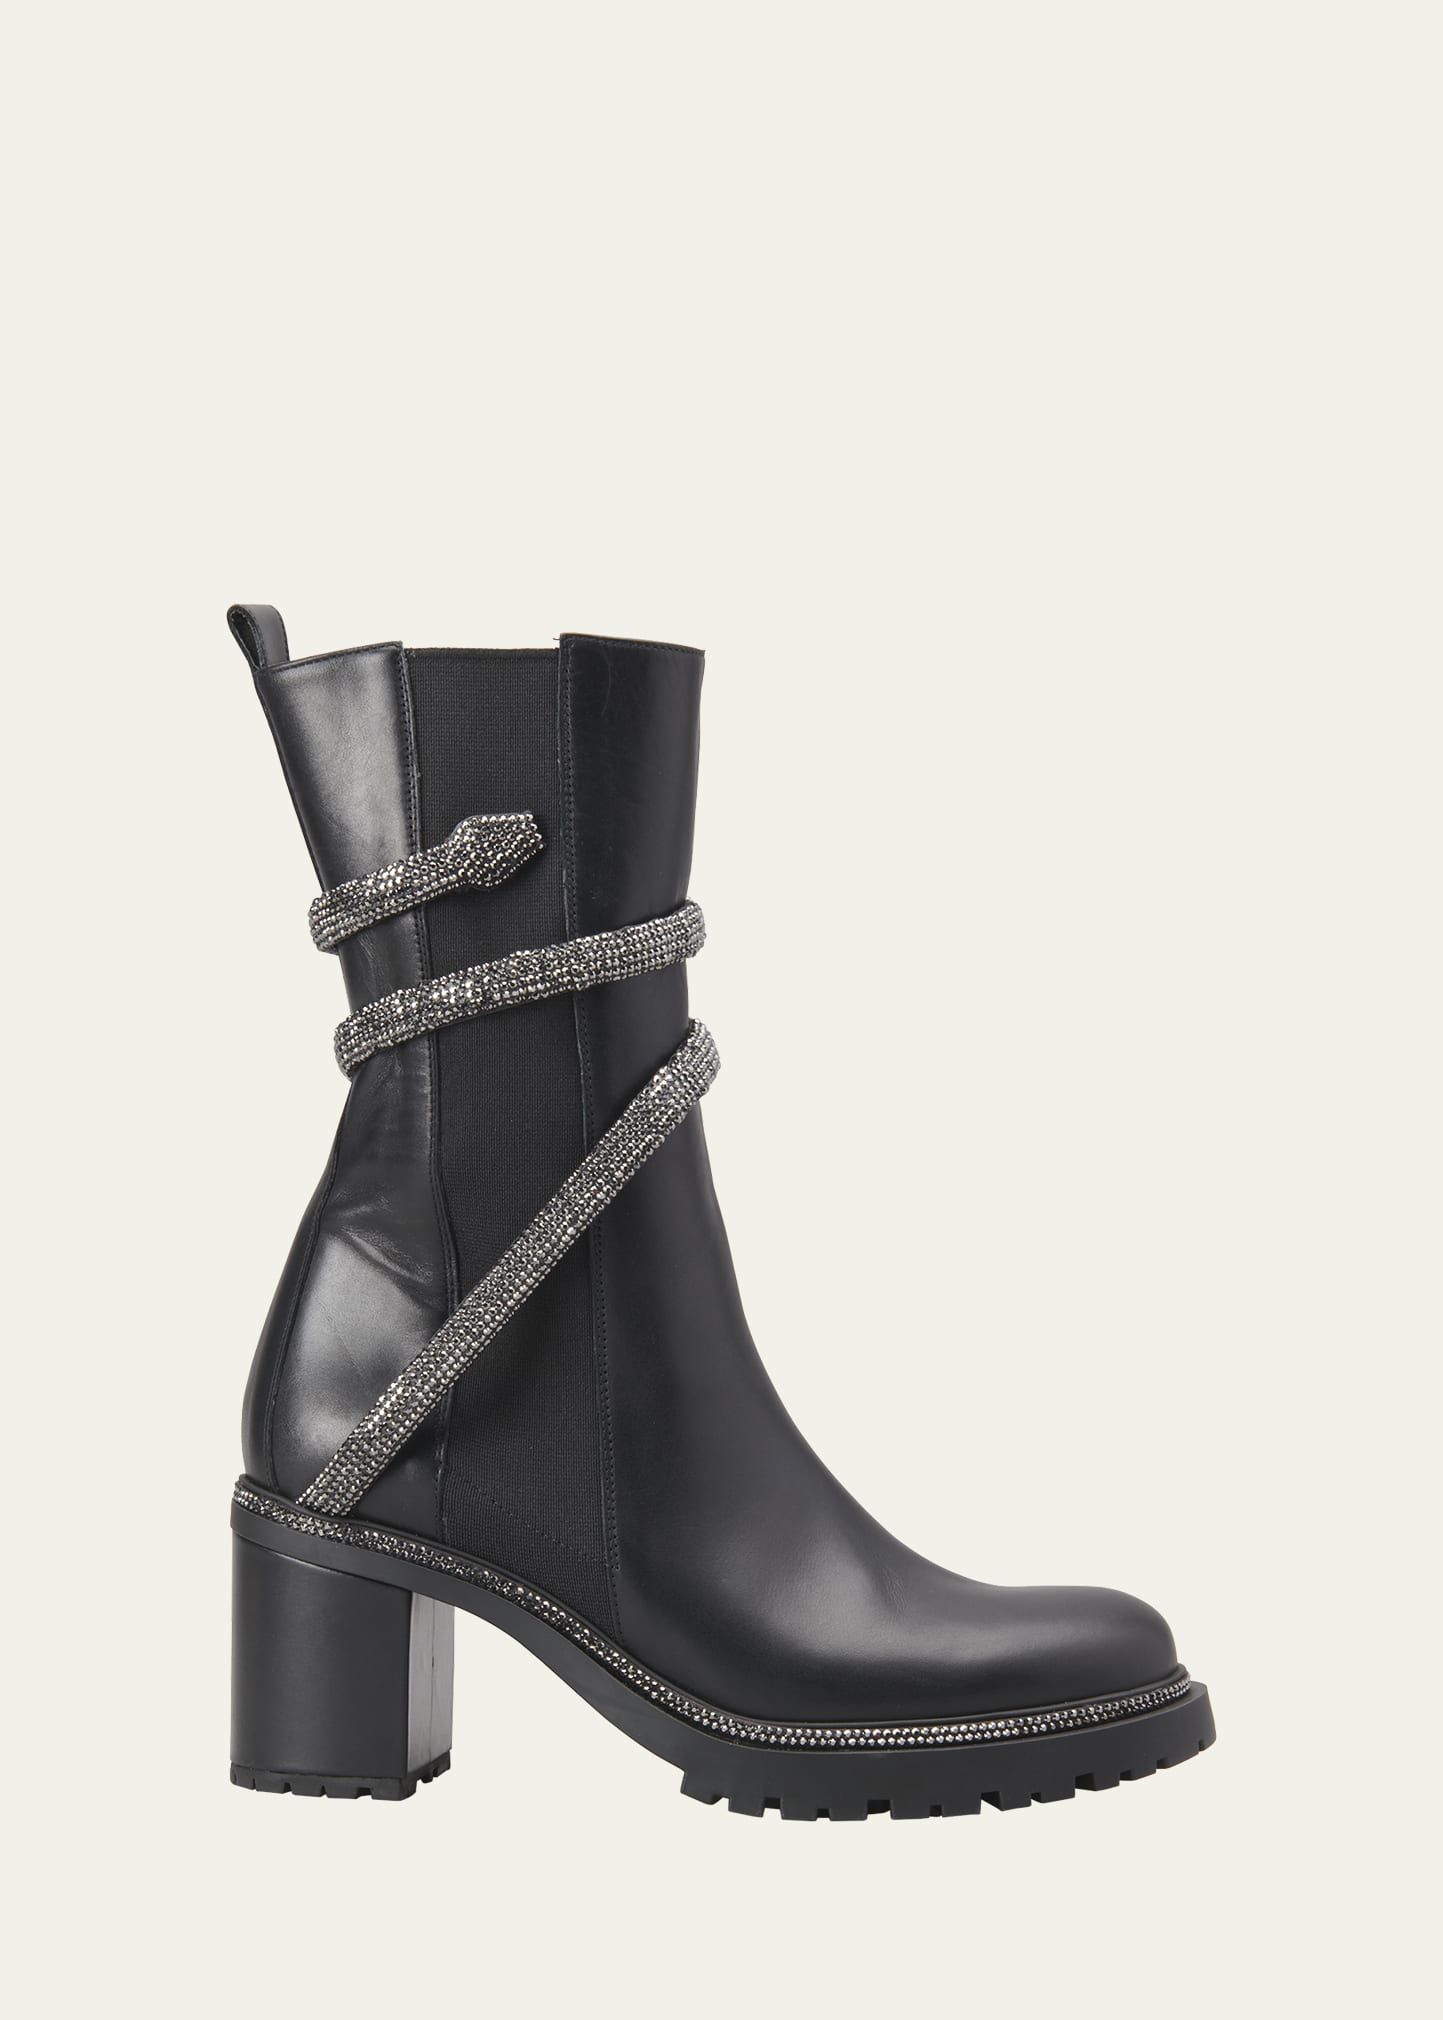 Rene Caovilla Leather Strass Snake Chelsea Boots | Bergdorf Goodman